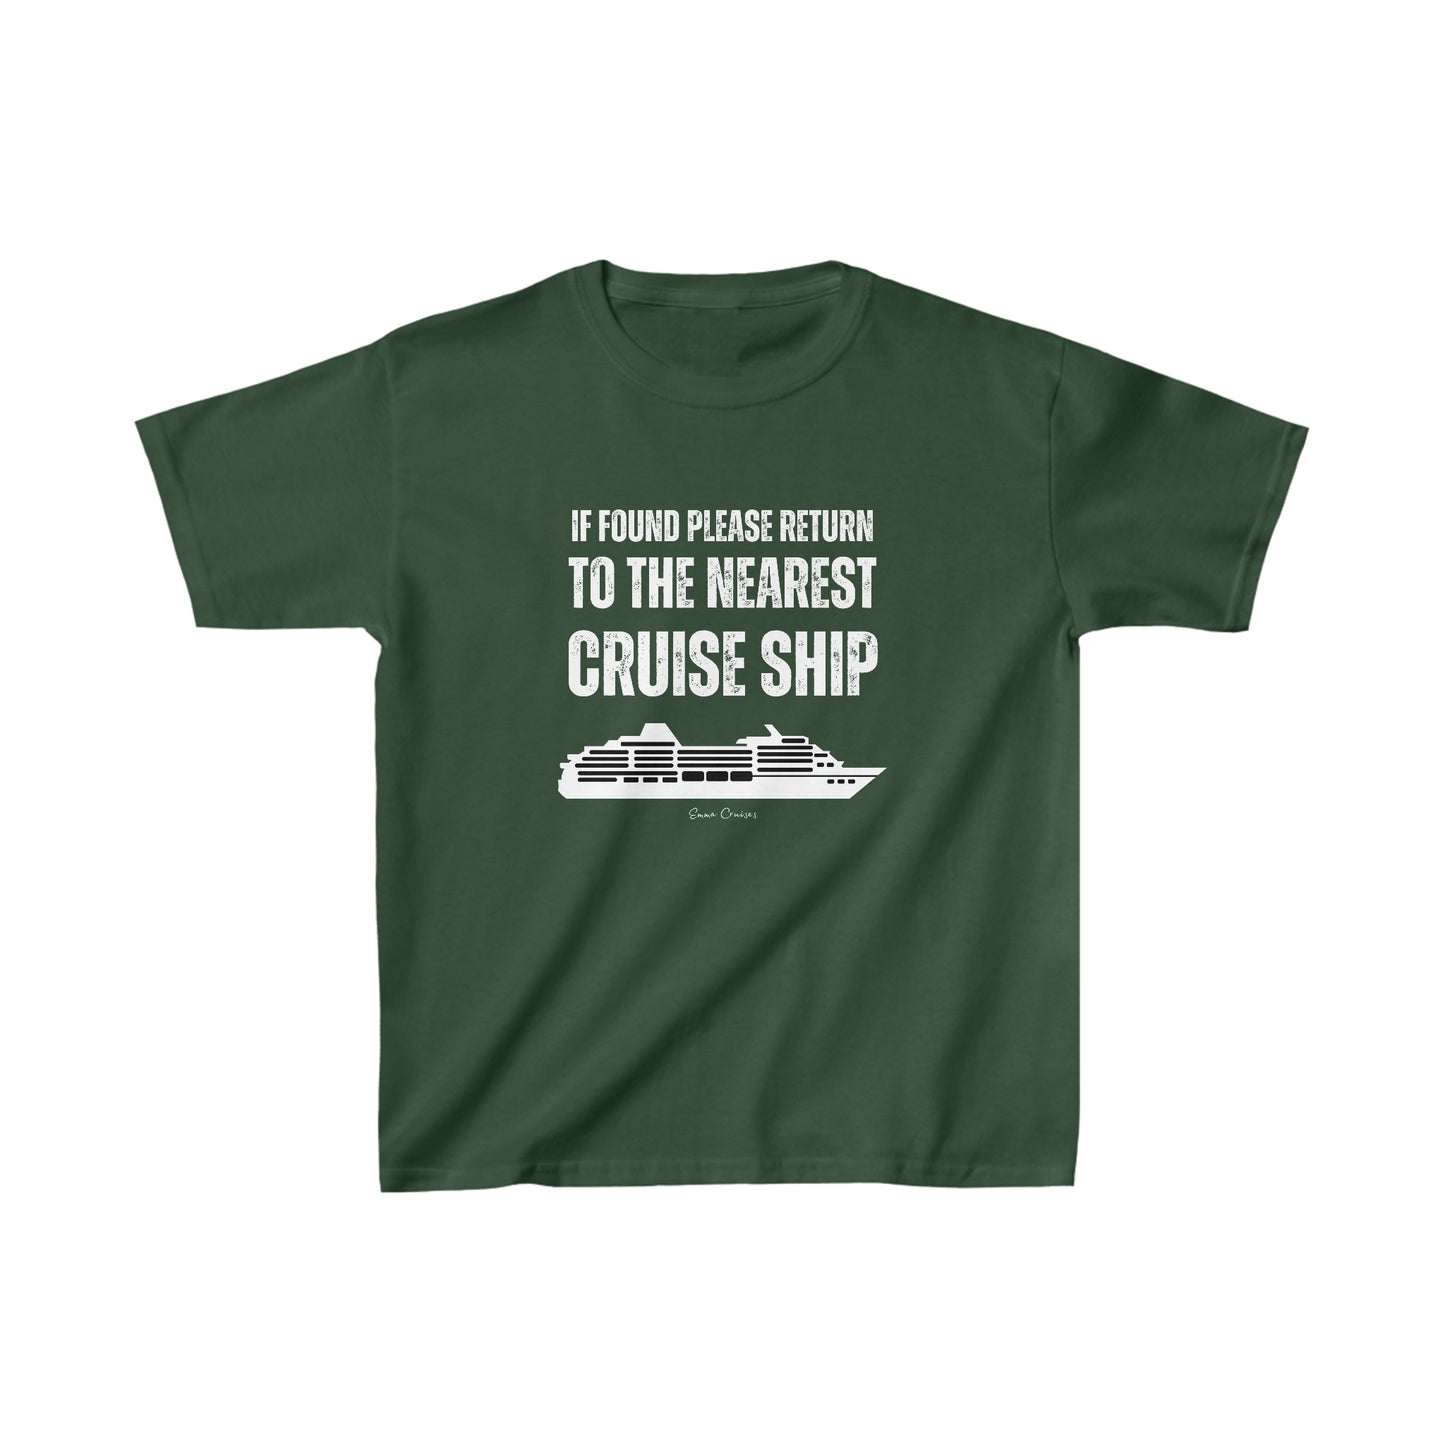 Return to Cruise Ship - Kids UNISEX T-Shirt